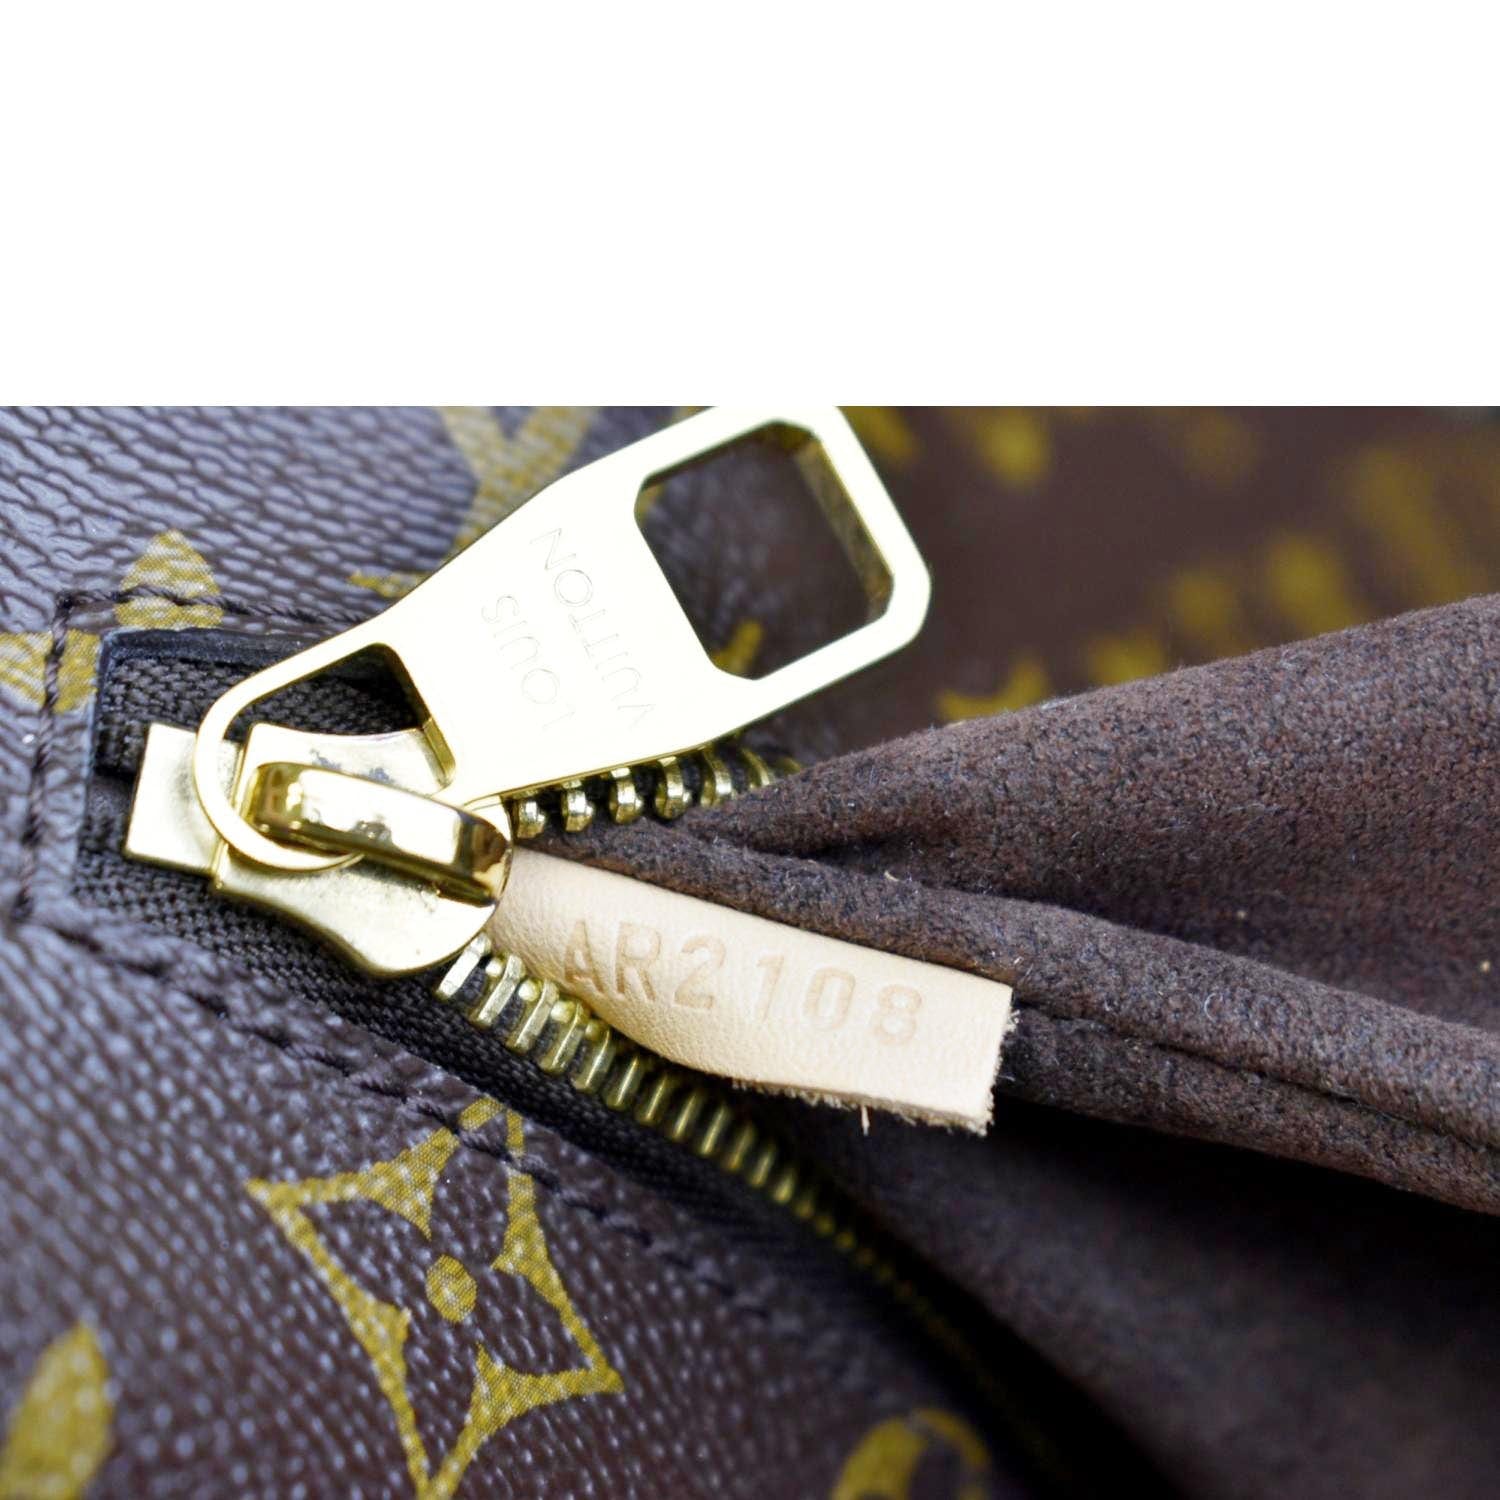 Metis cloth crossbody bag Louis Vuitton Brown in Cloth - 25975457